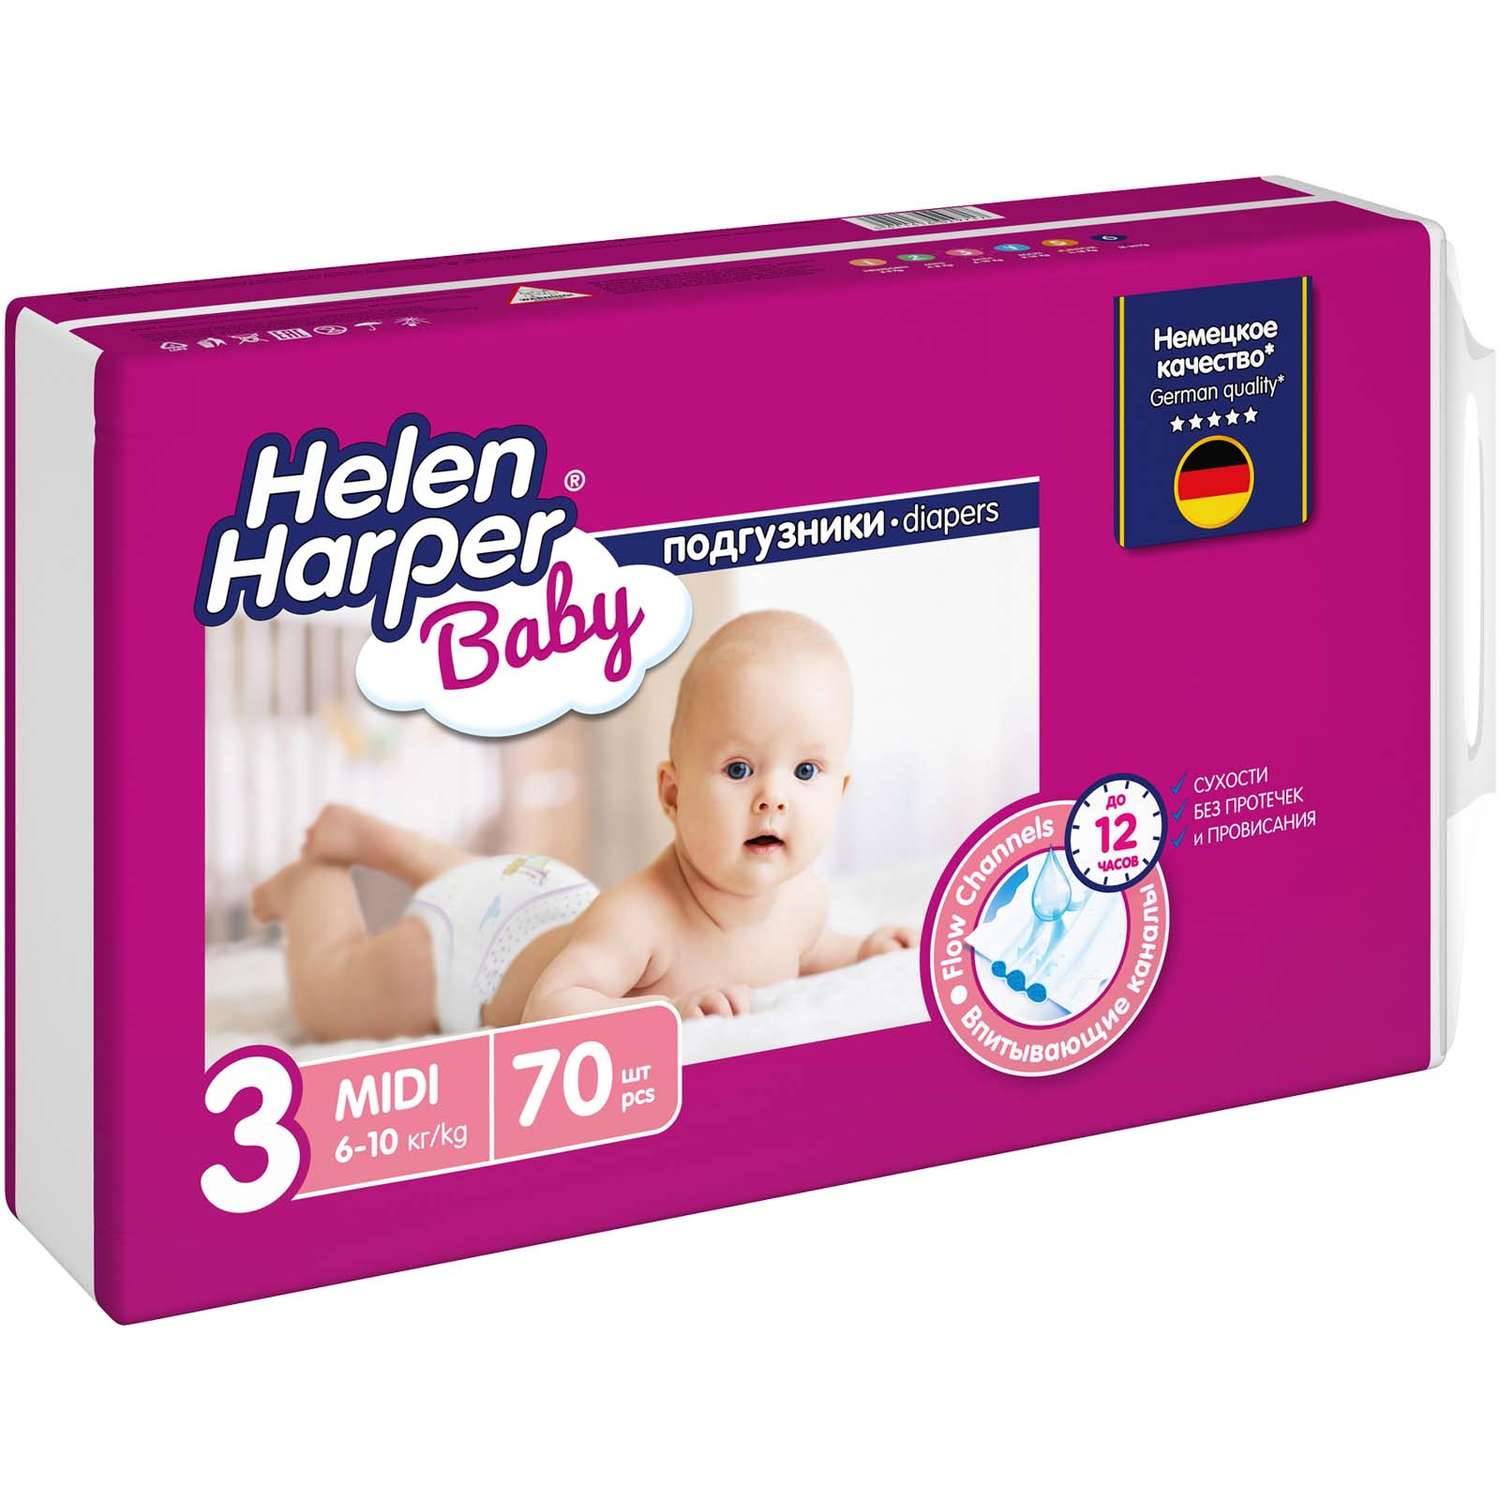 Подгузники Helen Harper Baby детские размер 3 Midi 70 шт - фото 3